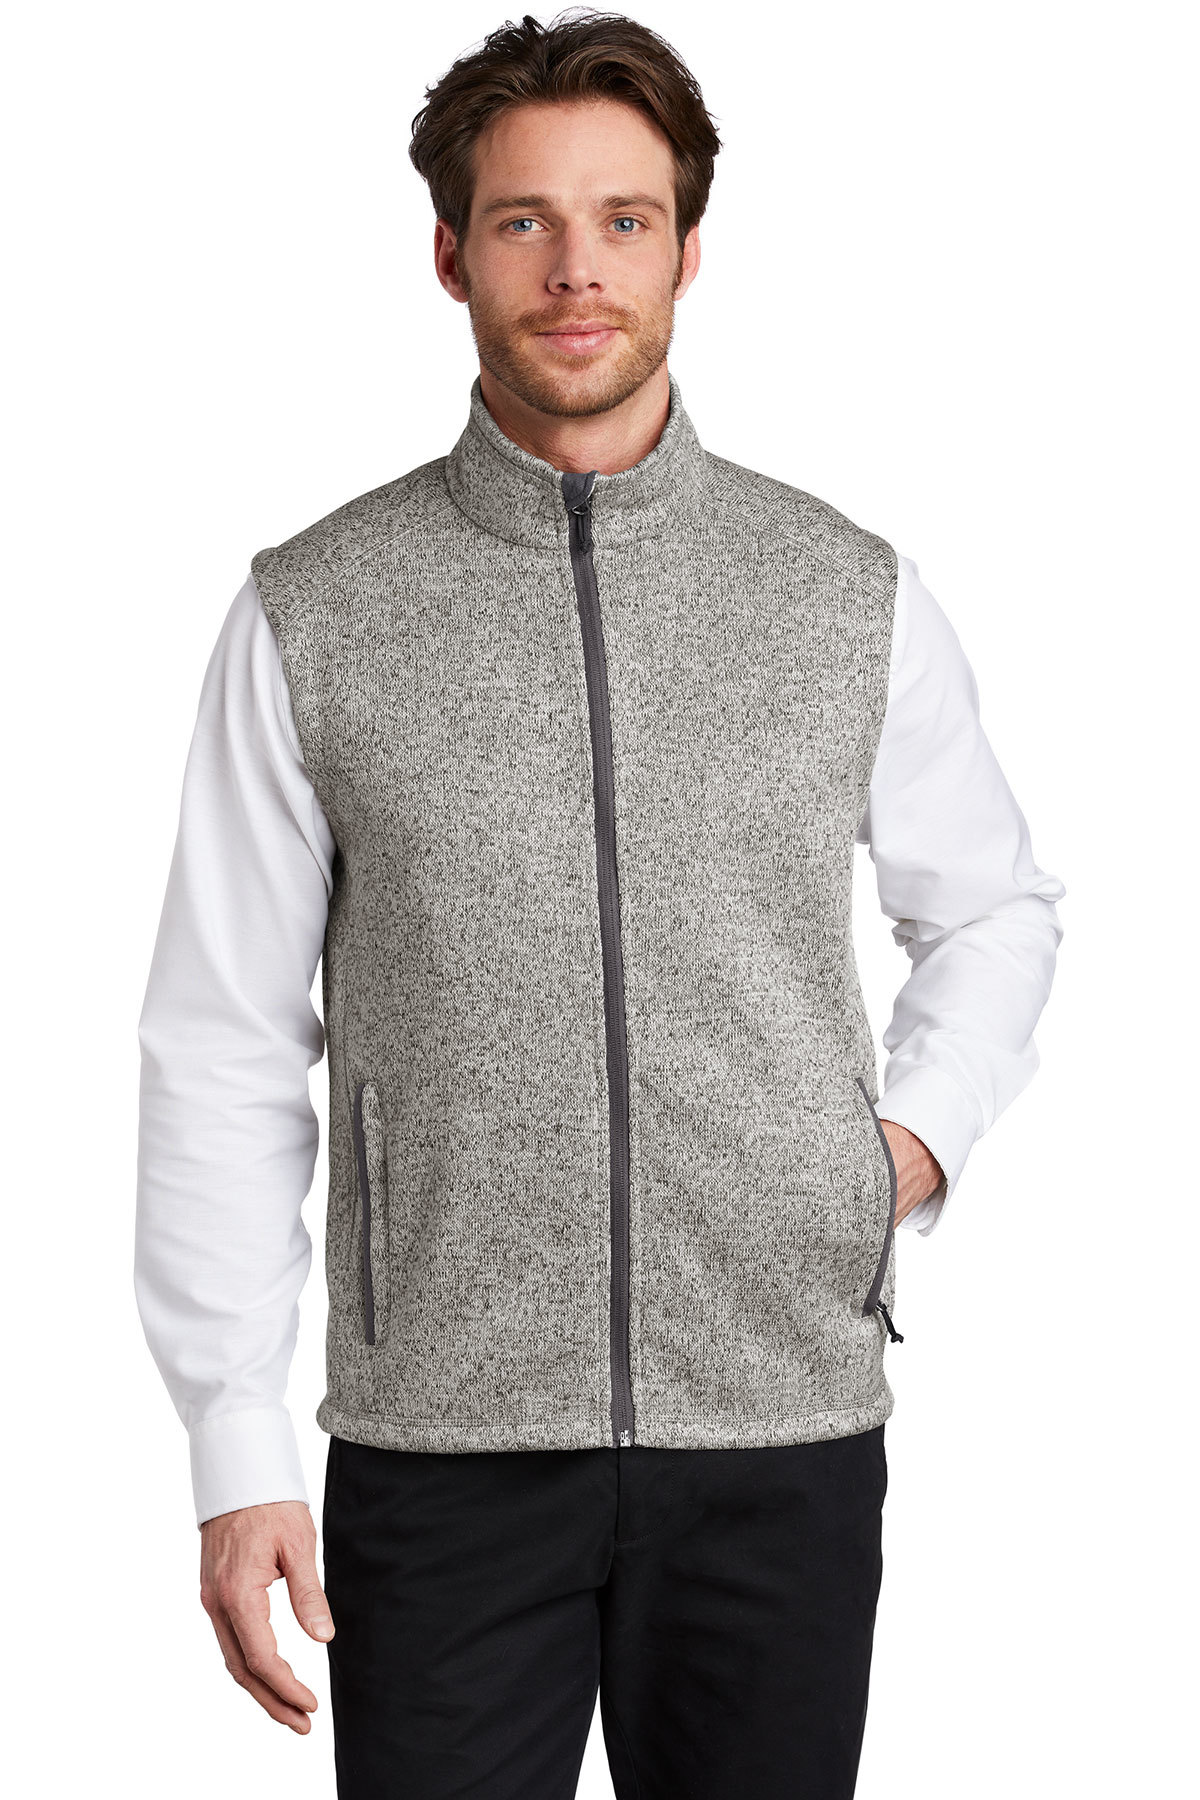 Port Authority F236 - Sweater Fleece Vest